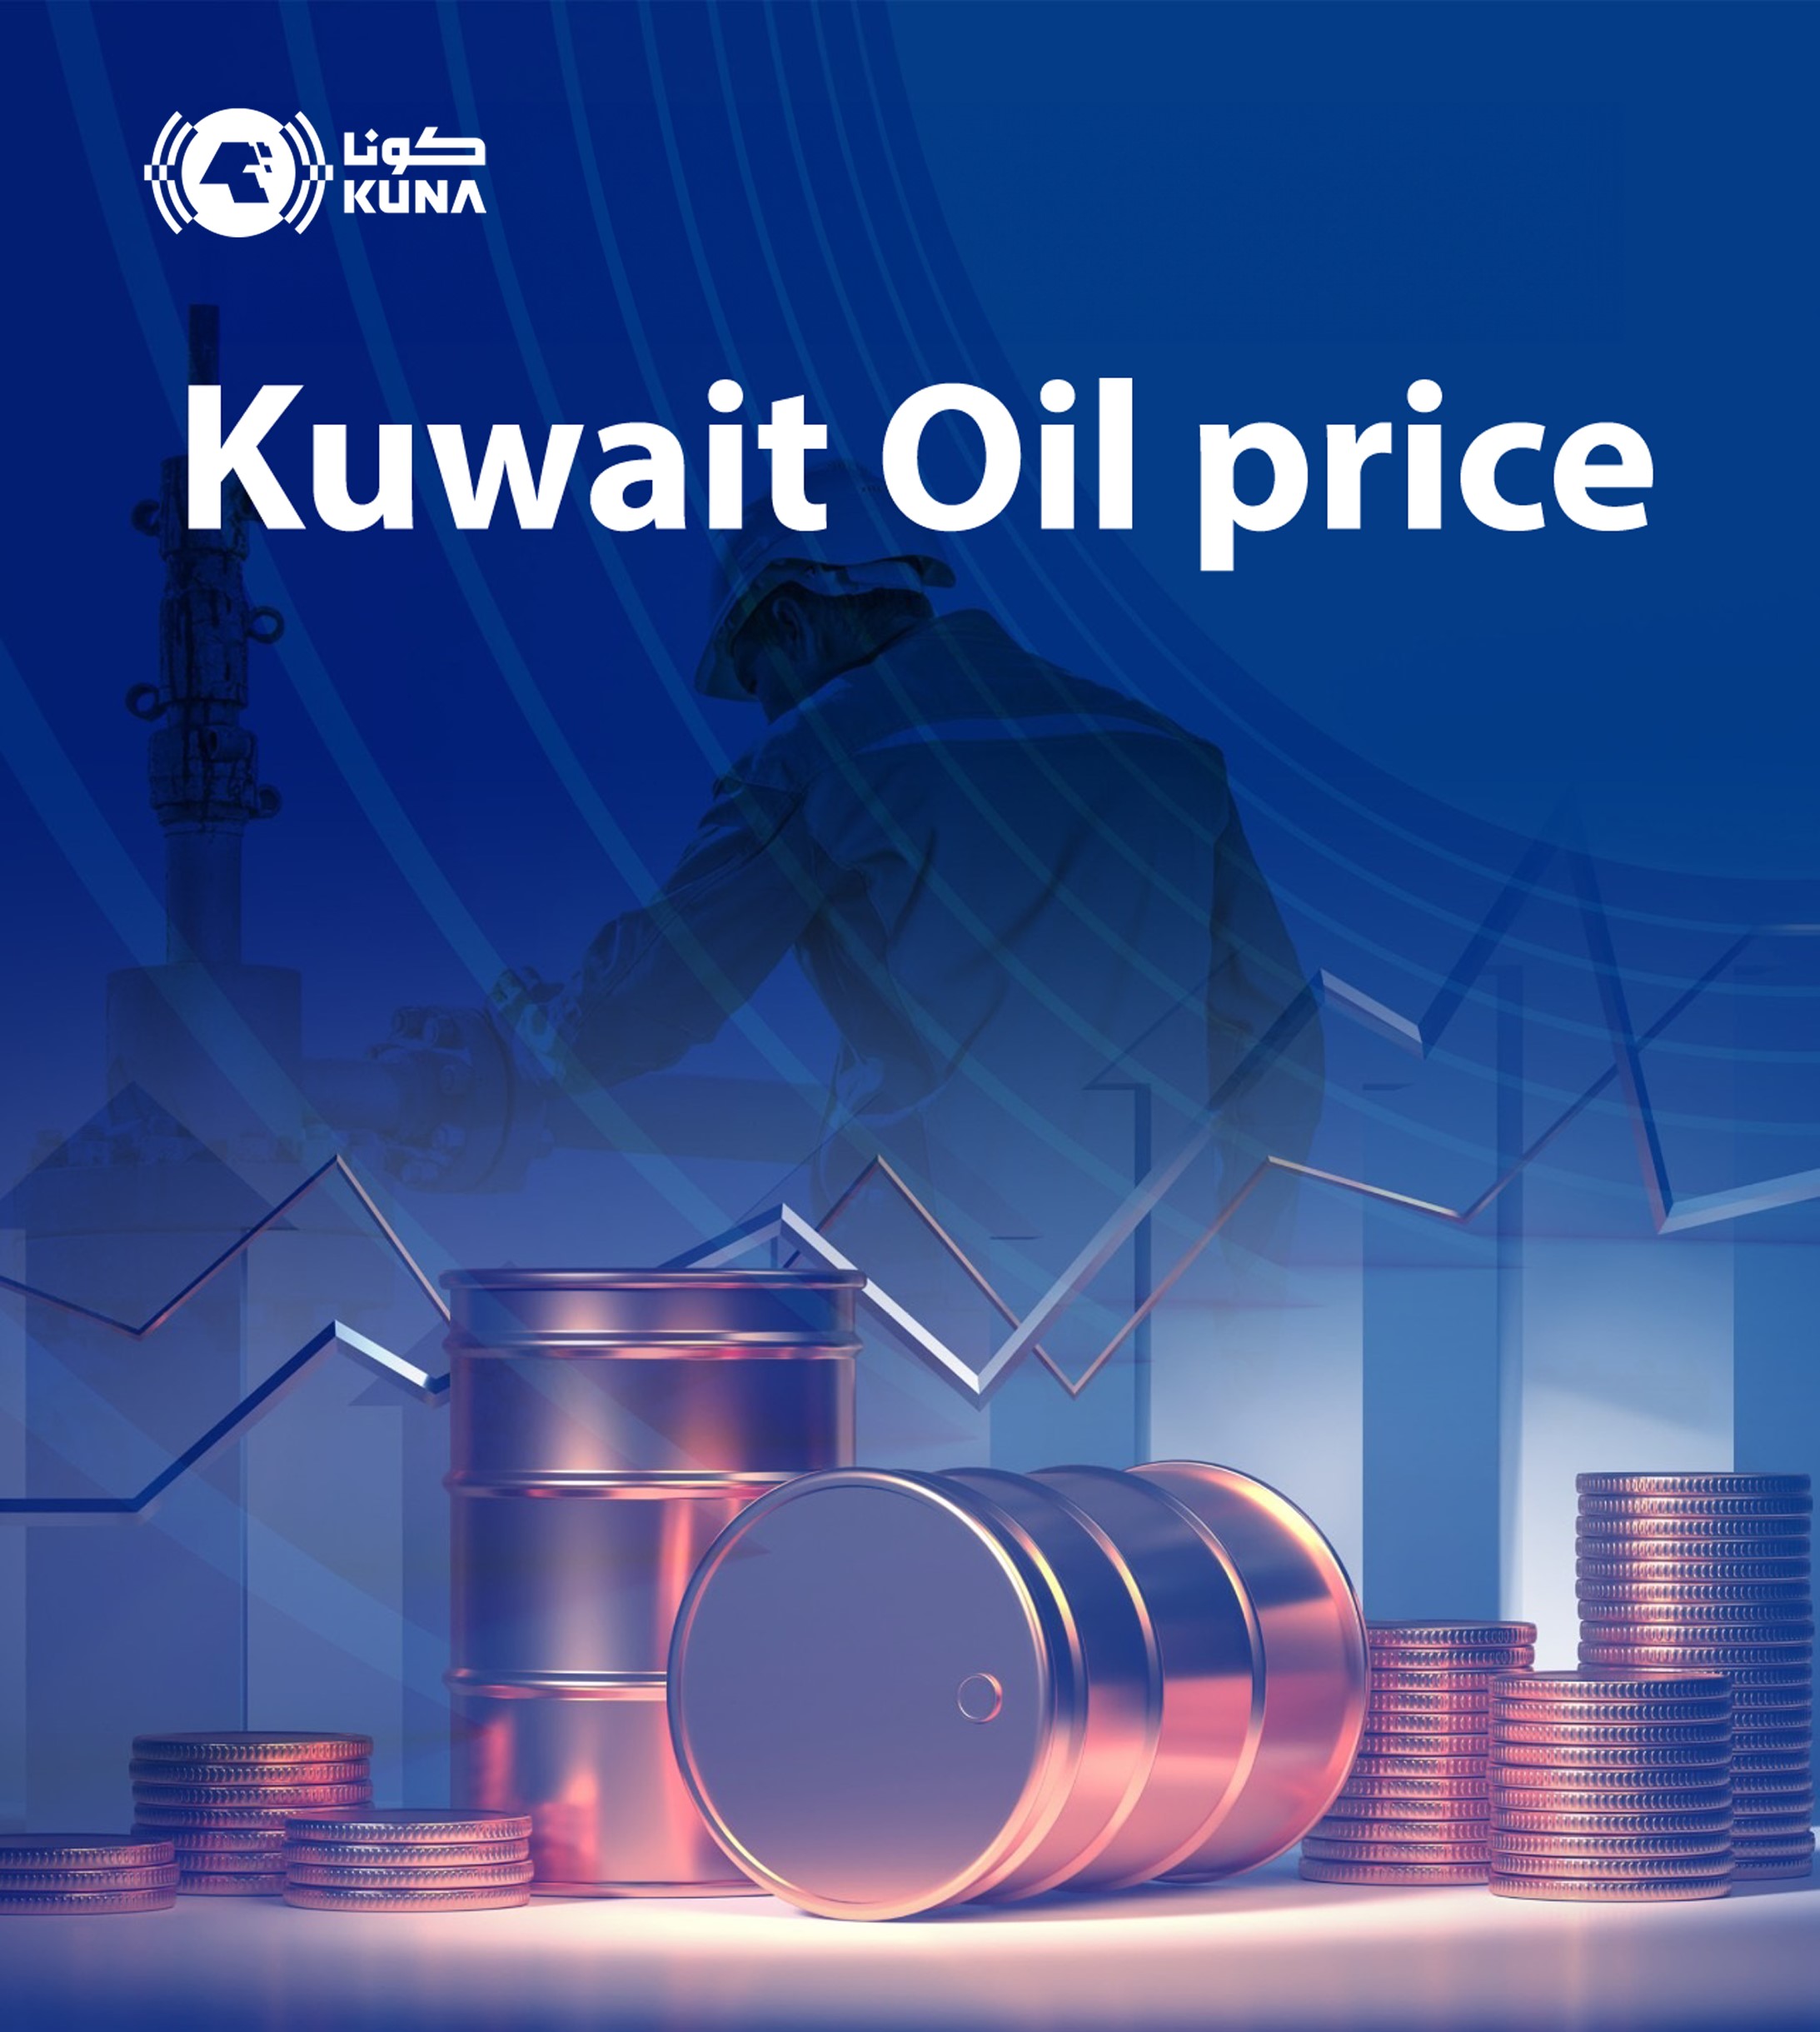 Kuwaiti oil price up 15 cents to USD 91.40 pb                                                                                                                                                                                                             